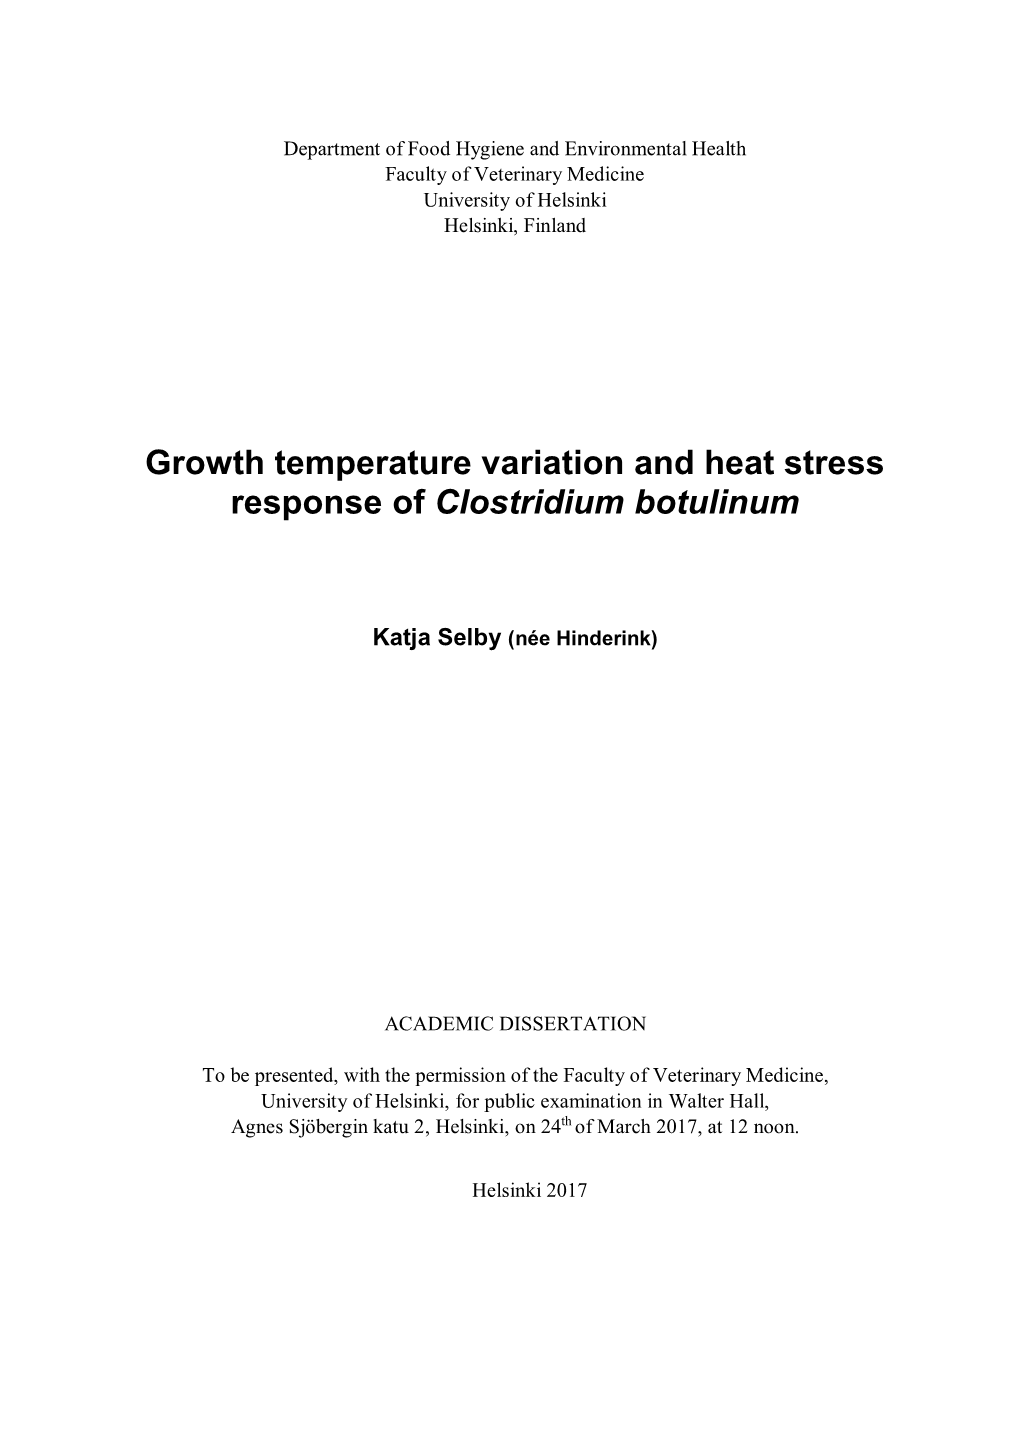 Growth Temperature Variation and Heat Stress Response of Clostridium Botulinum